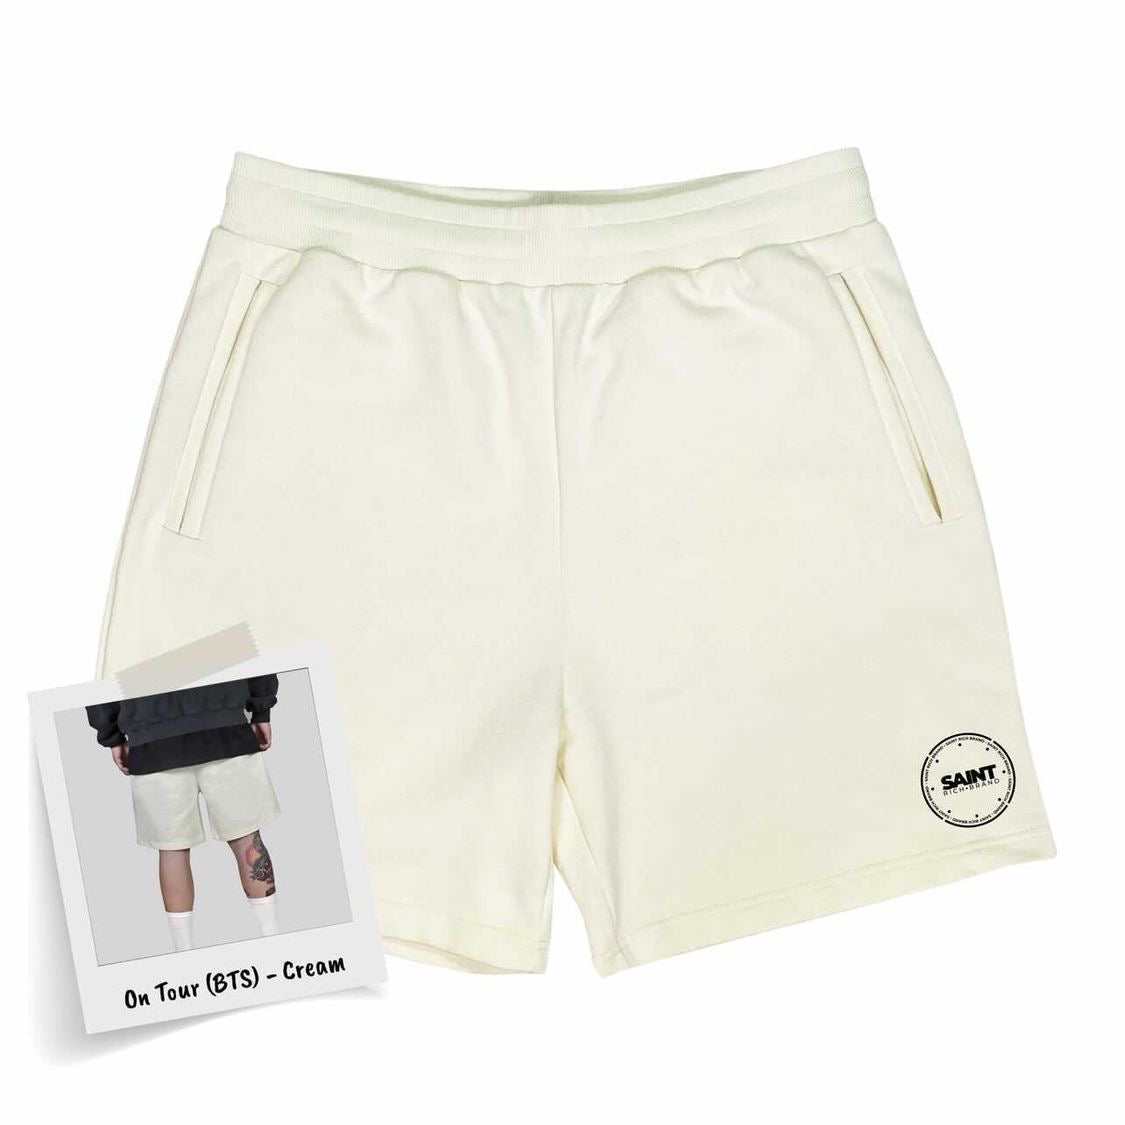 S1:E1 Lux Street Wear: On Tour Shorts – Saint Rich Brand